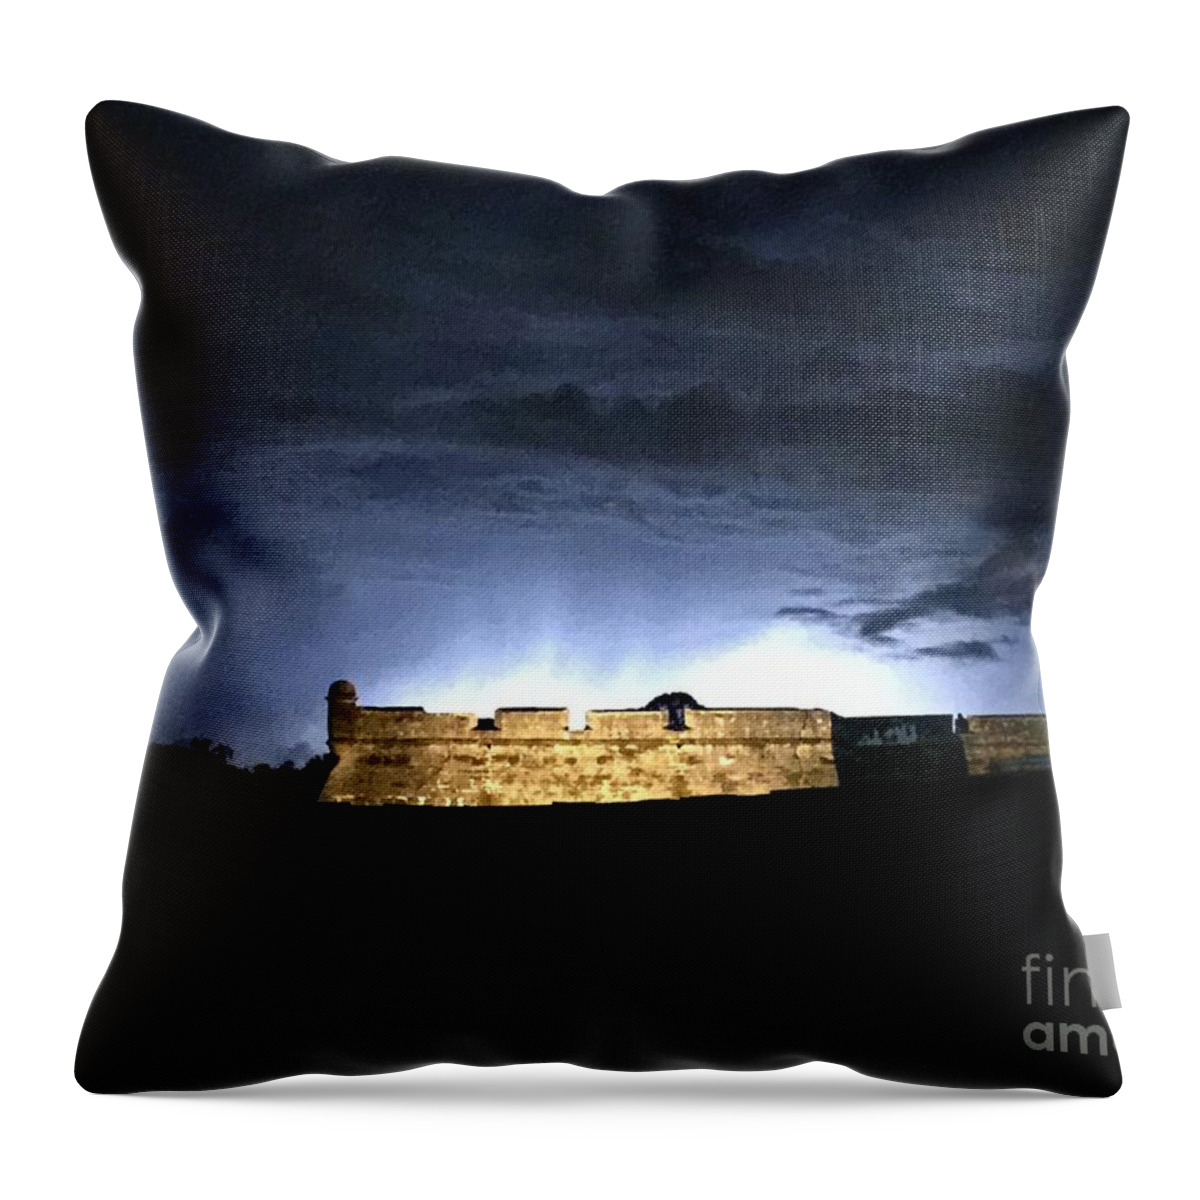 St. Augustine Throw Pillow featuring the photograph Lightening at Castillo de San Marco by LeeAnn Kendall